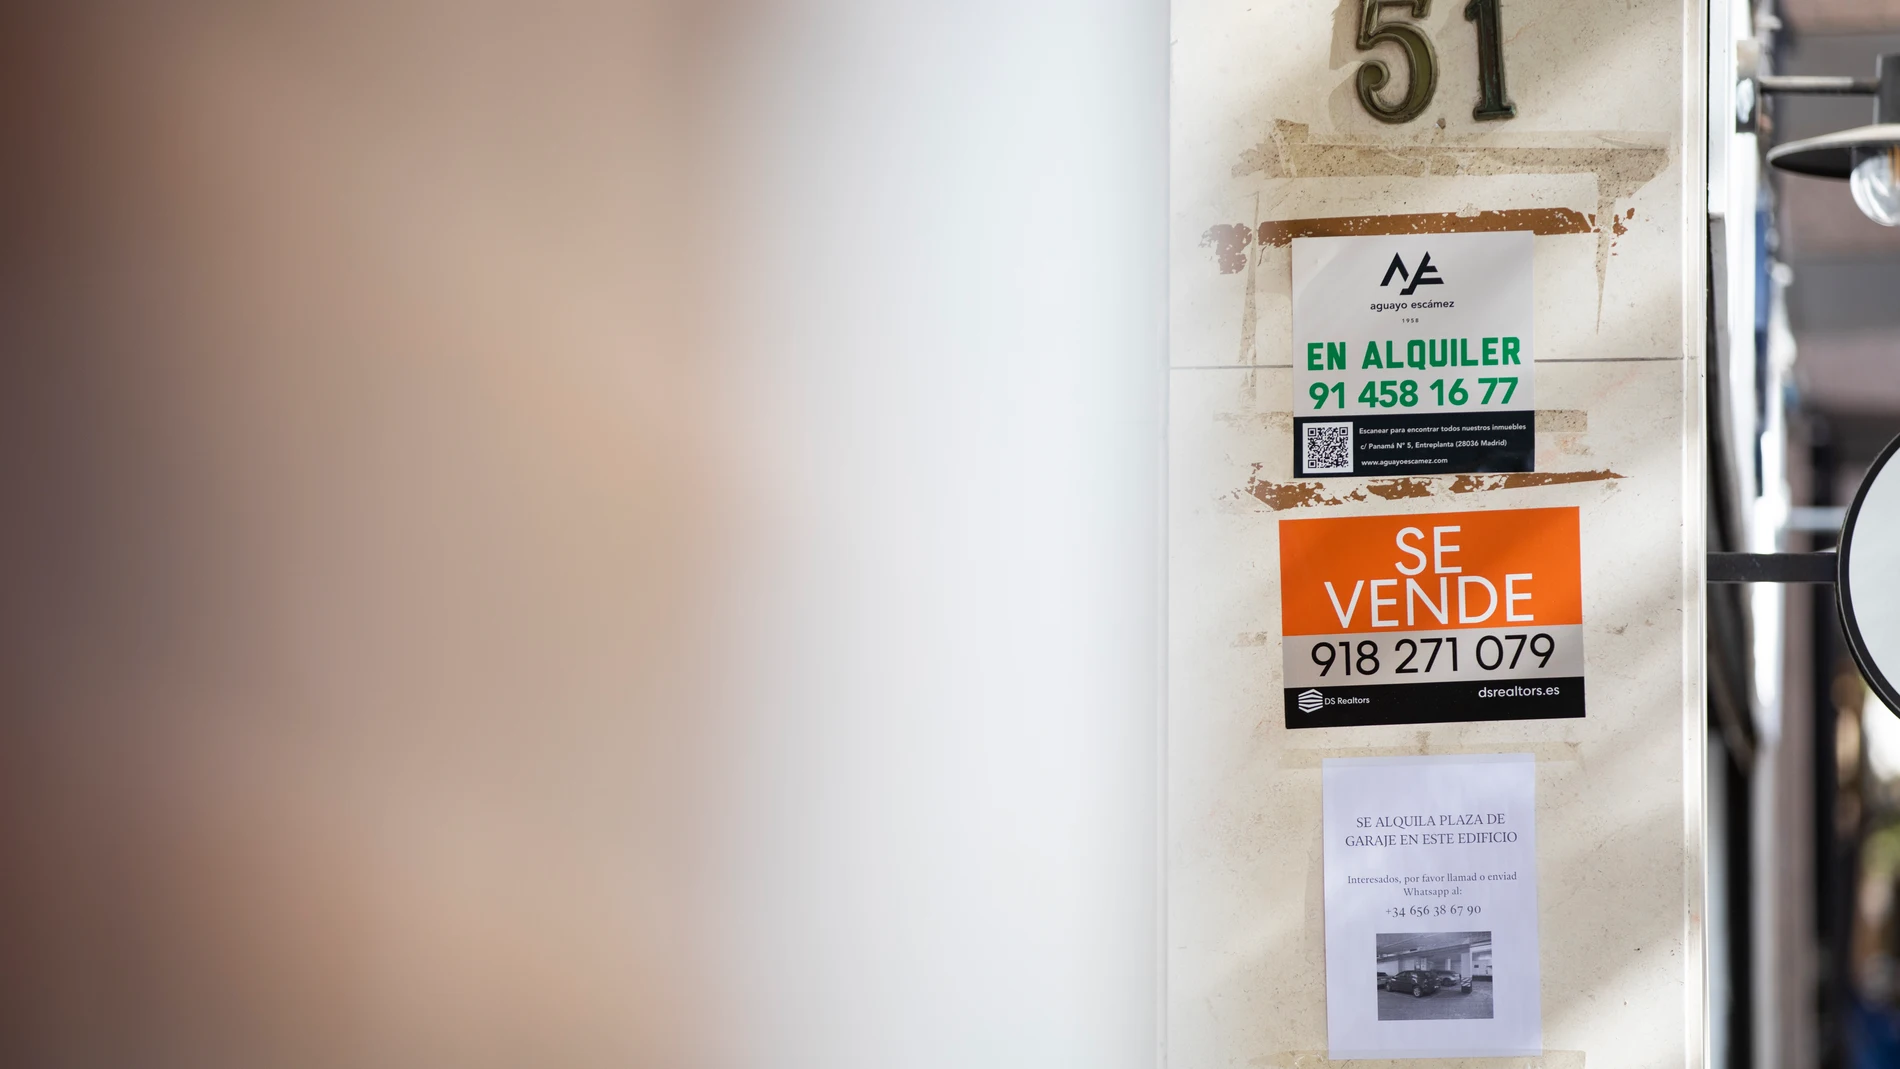 Carteles de se alquila se vende en un edificio de Madrid. © Jesús G. Feria.